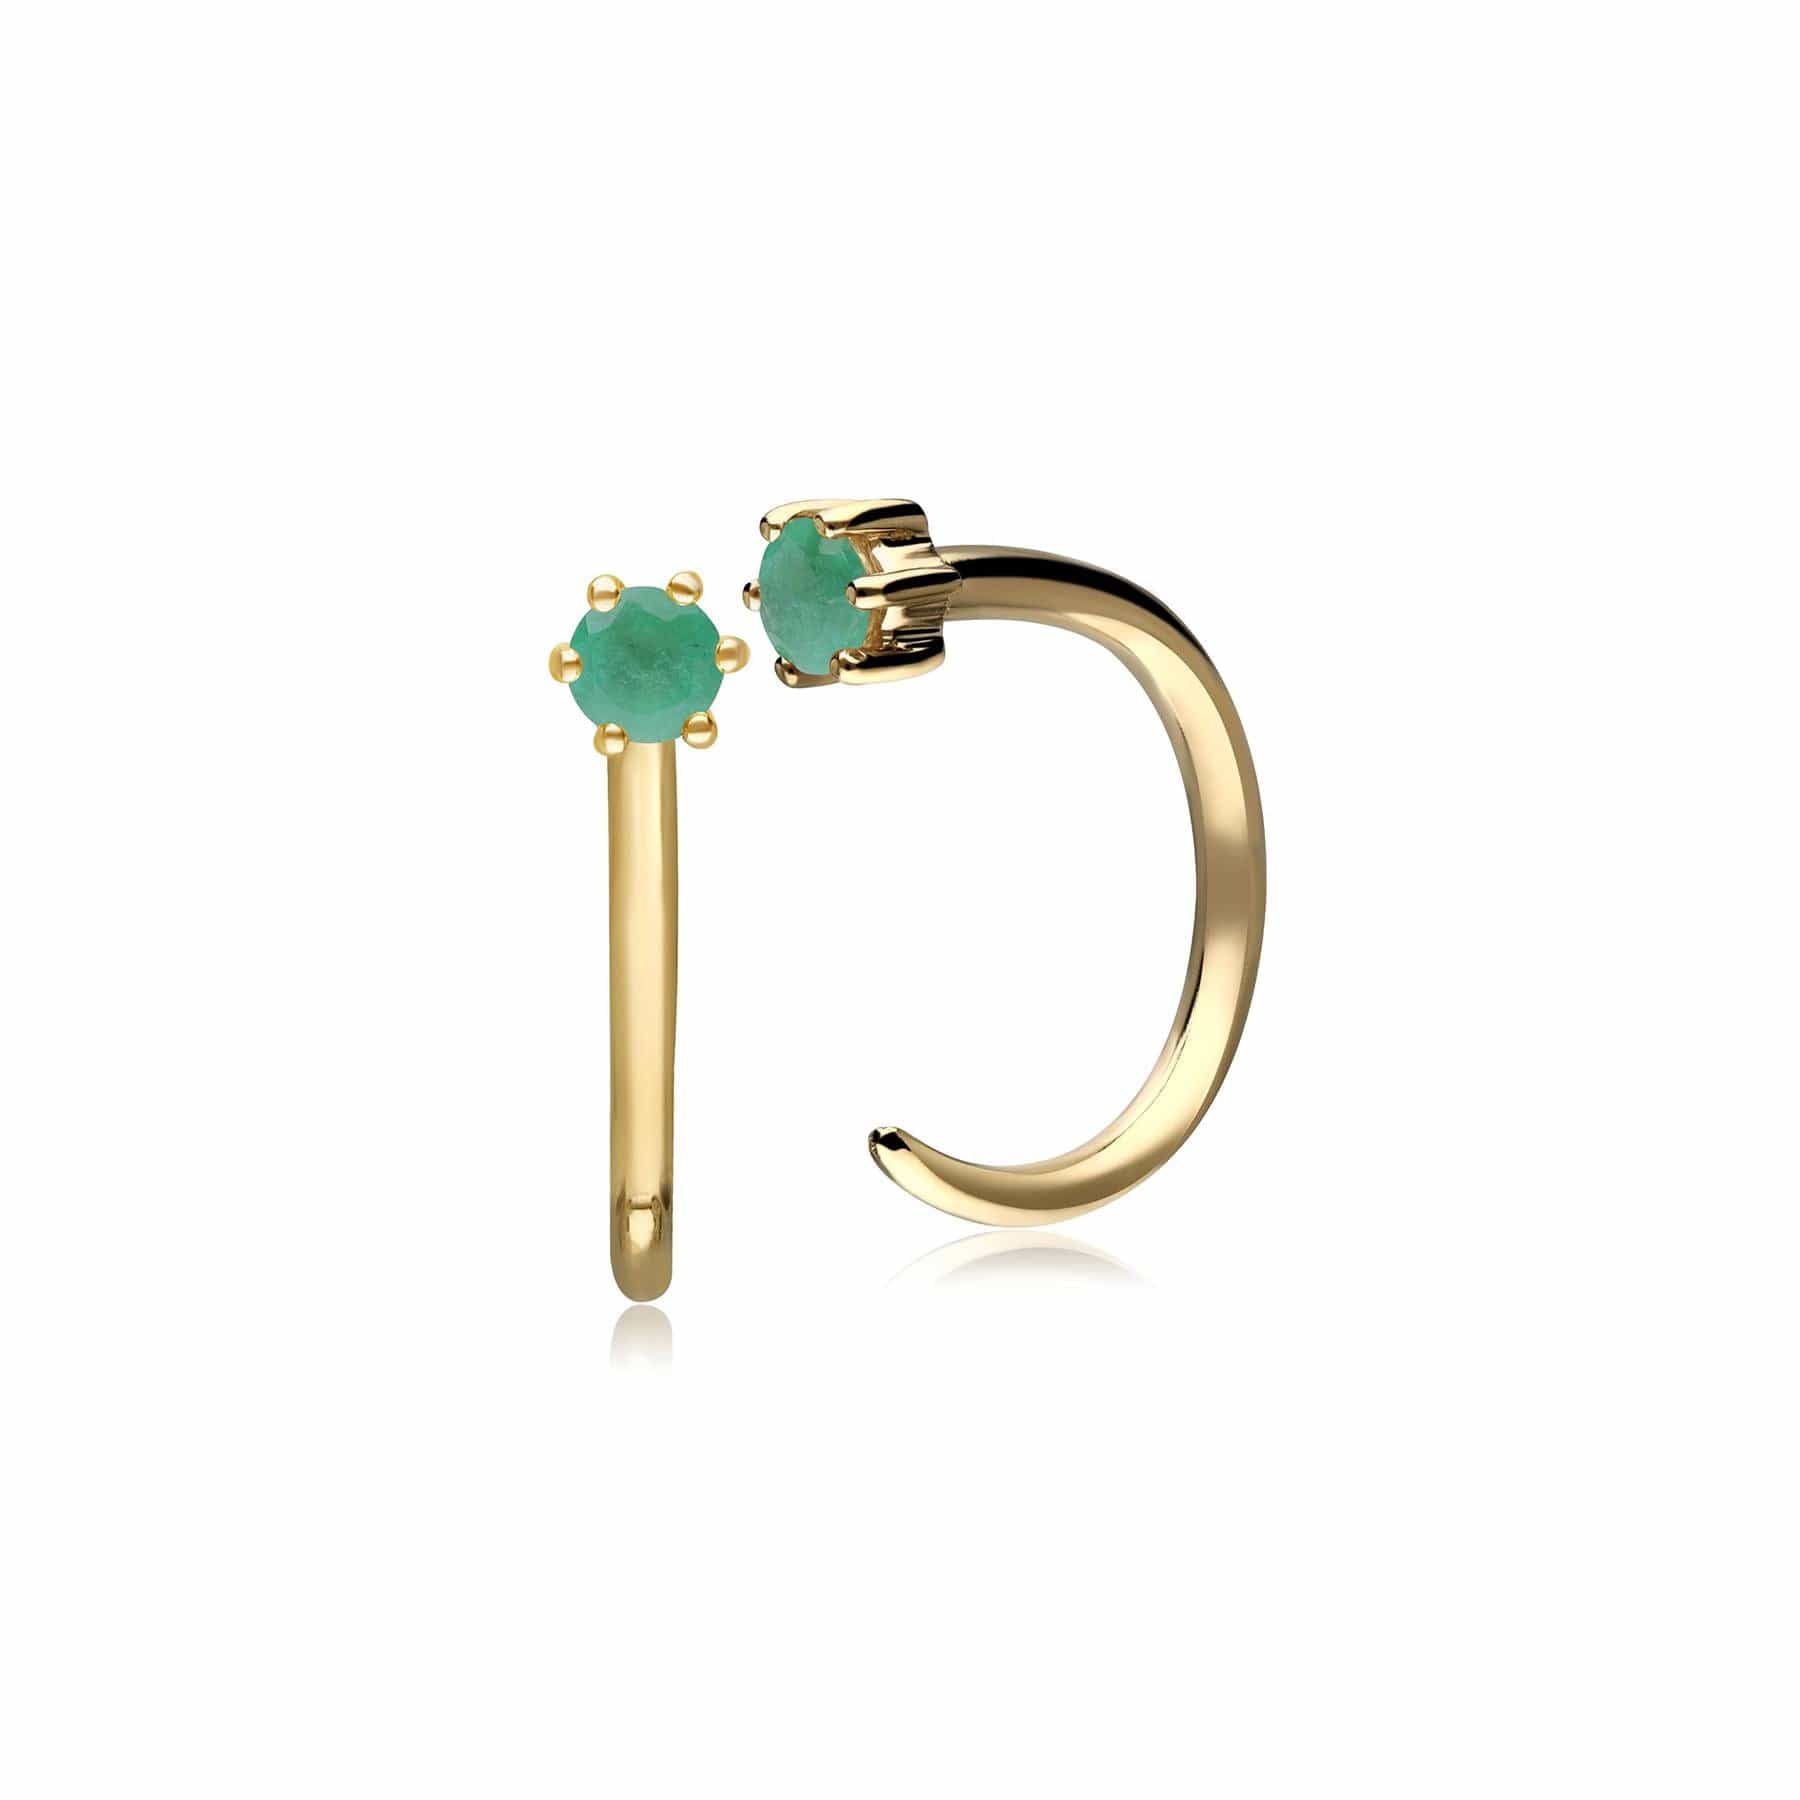 Gemondo Emerald Pull Through Hoop Earrings in 9ct Yellow Gold